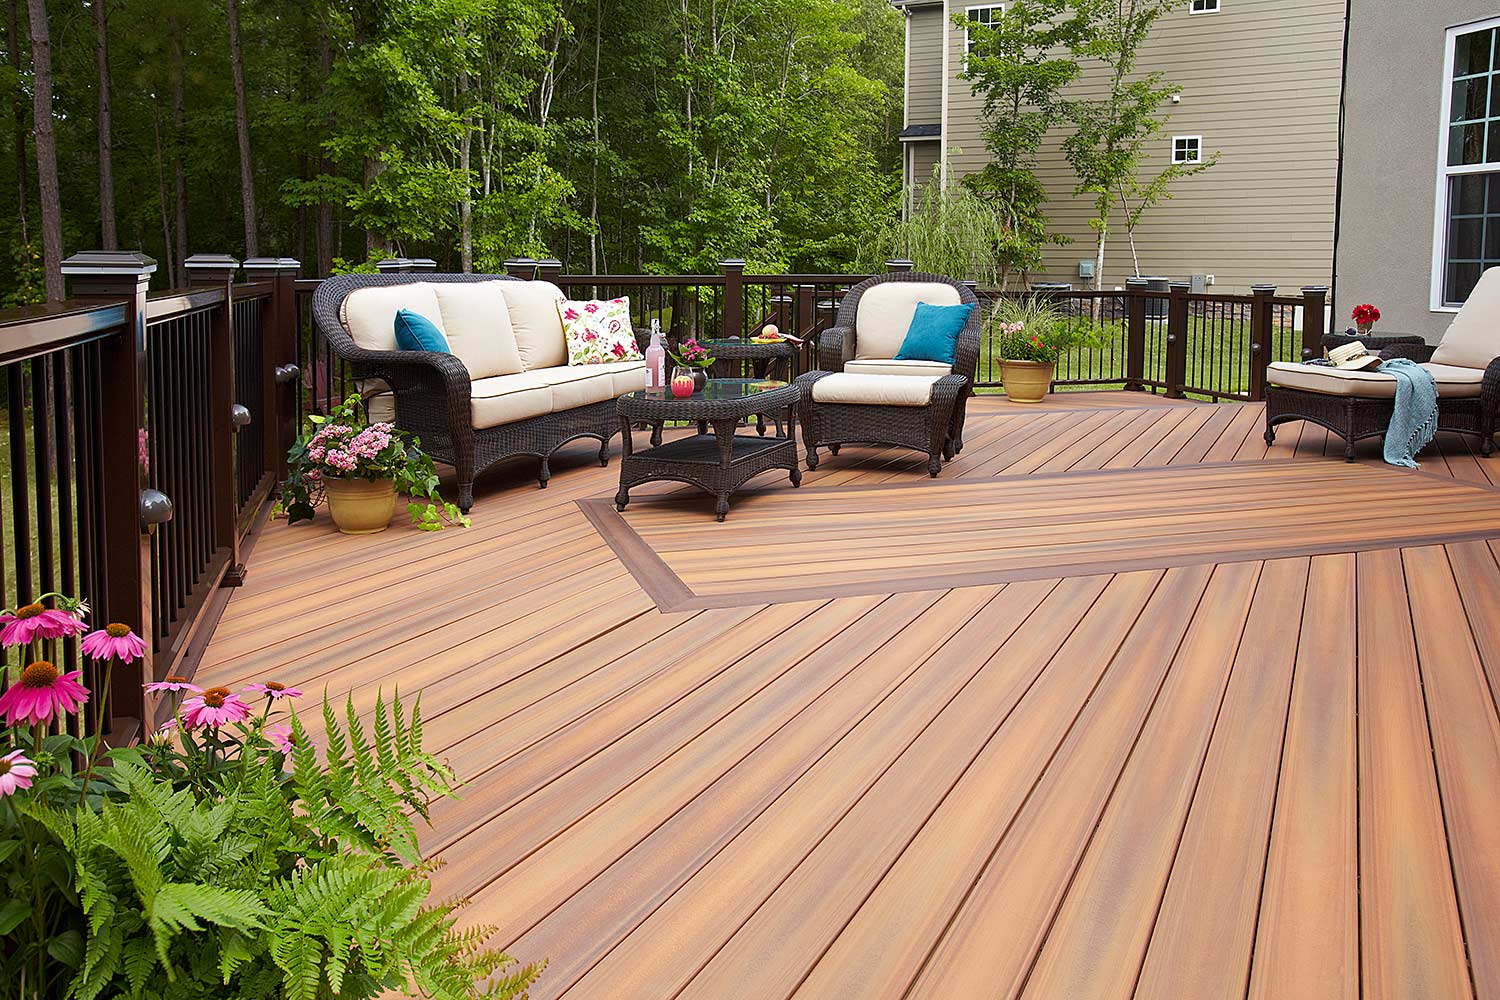 Brown composite patterned deck